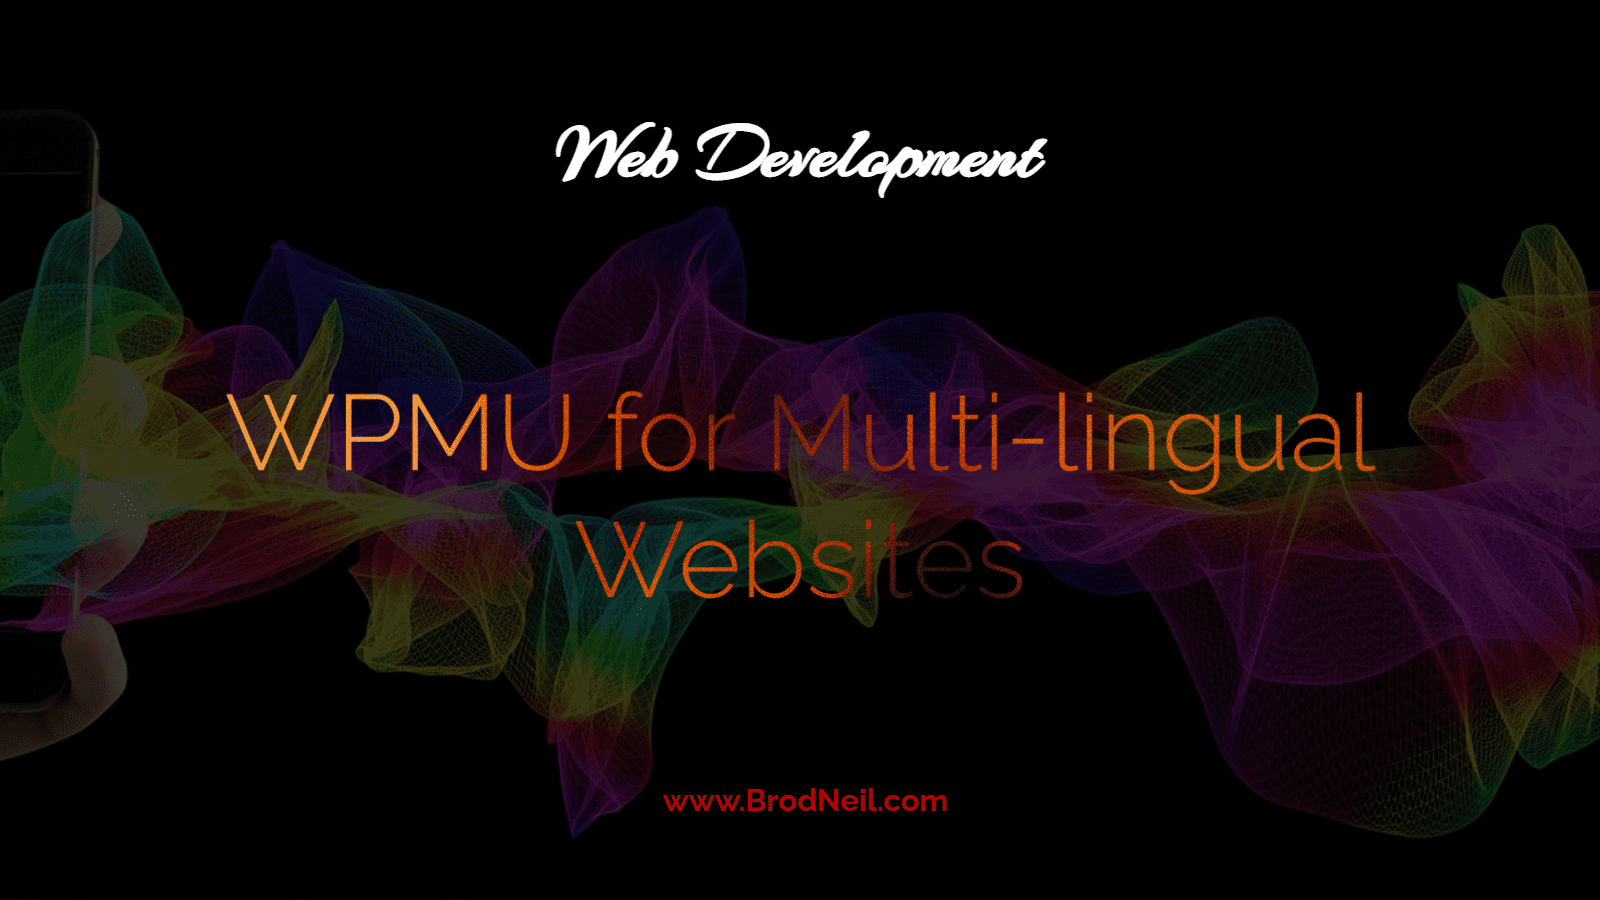 WPMU for Multi-lingual Websites